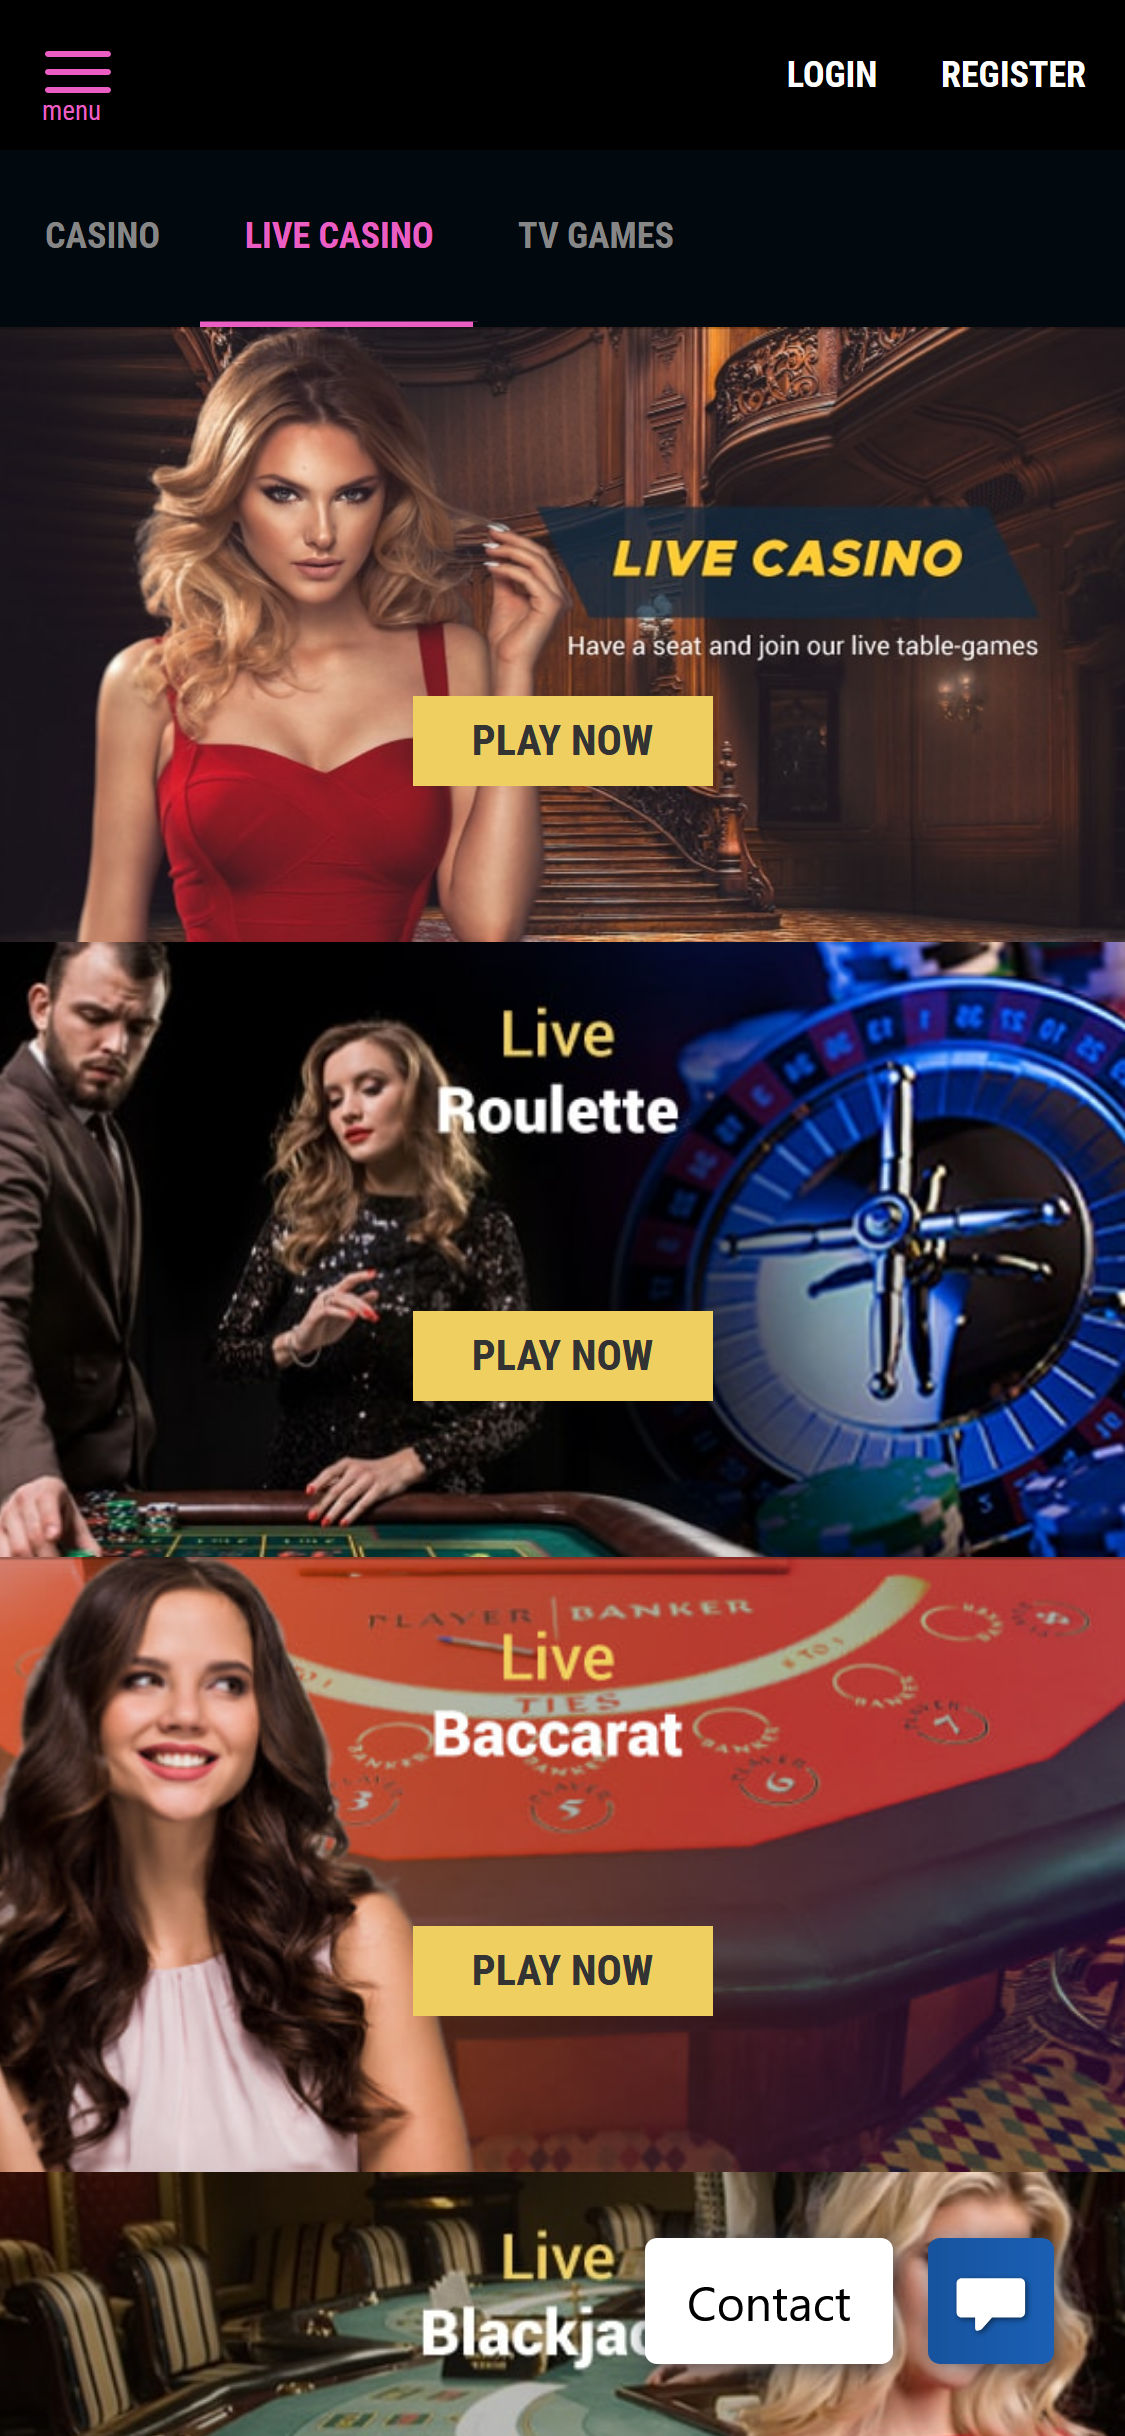 Bravo Win Casino Mobile Live Dealer Games Review